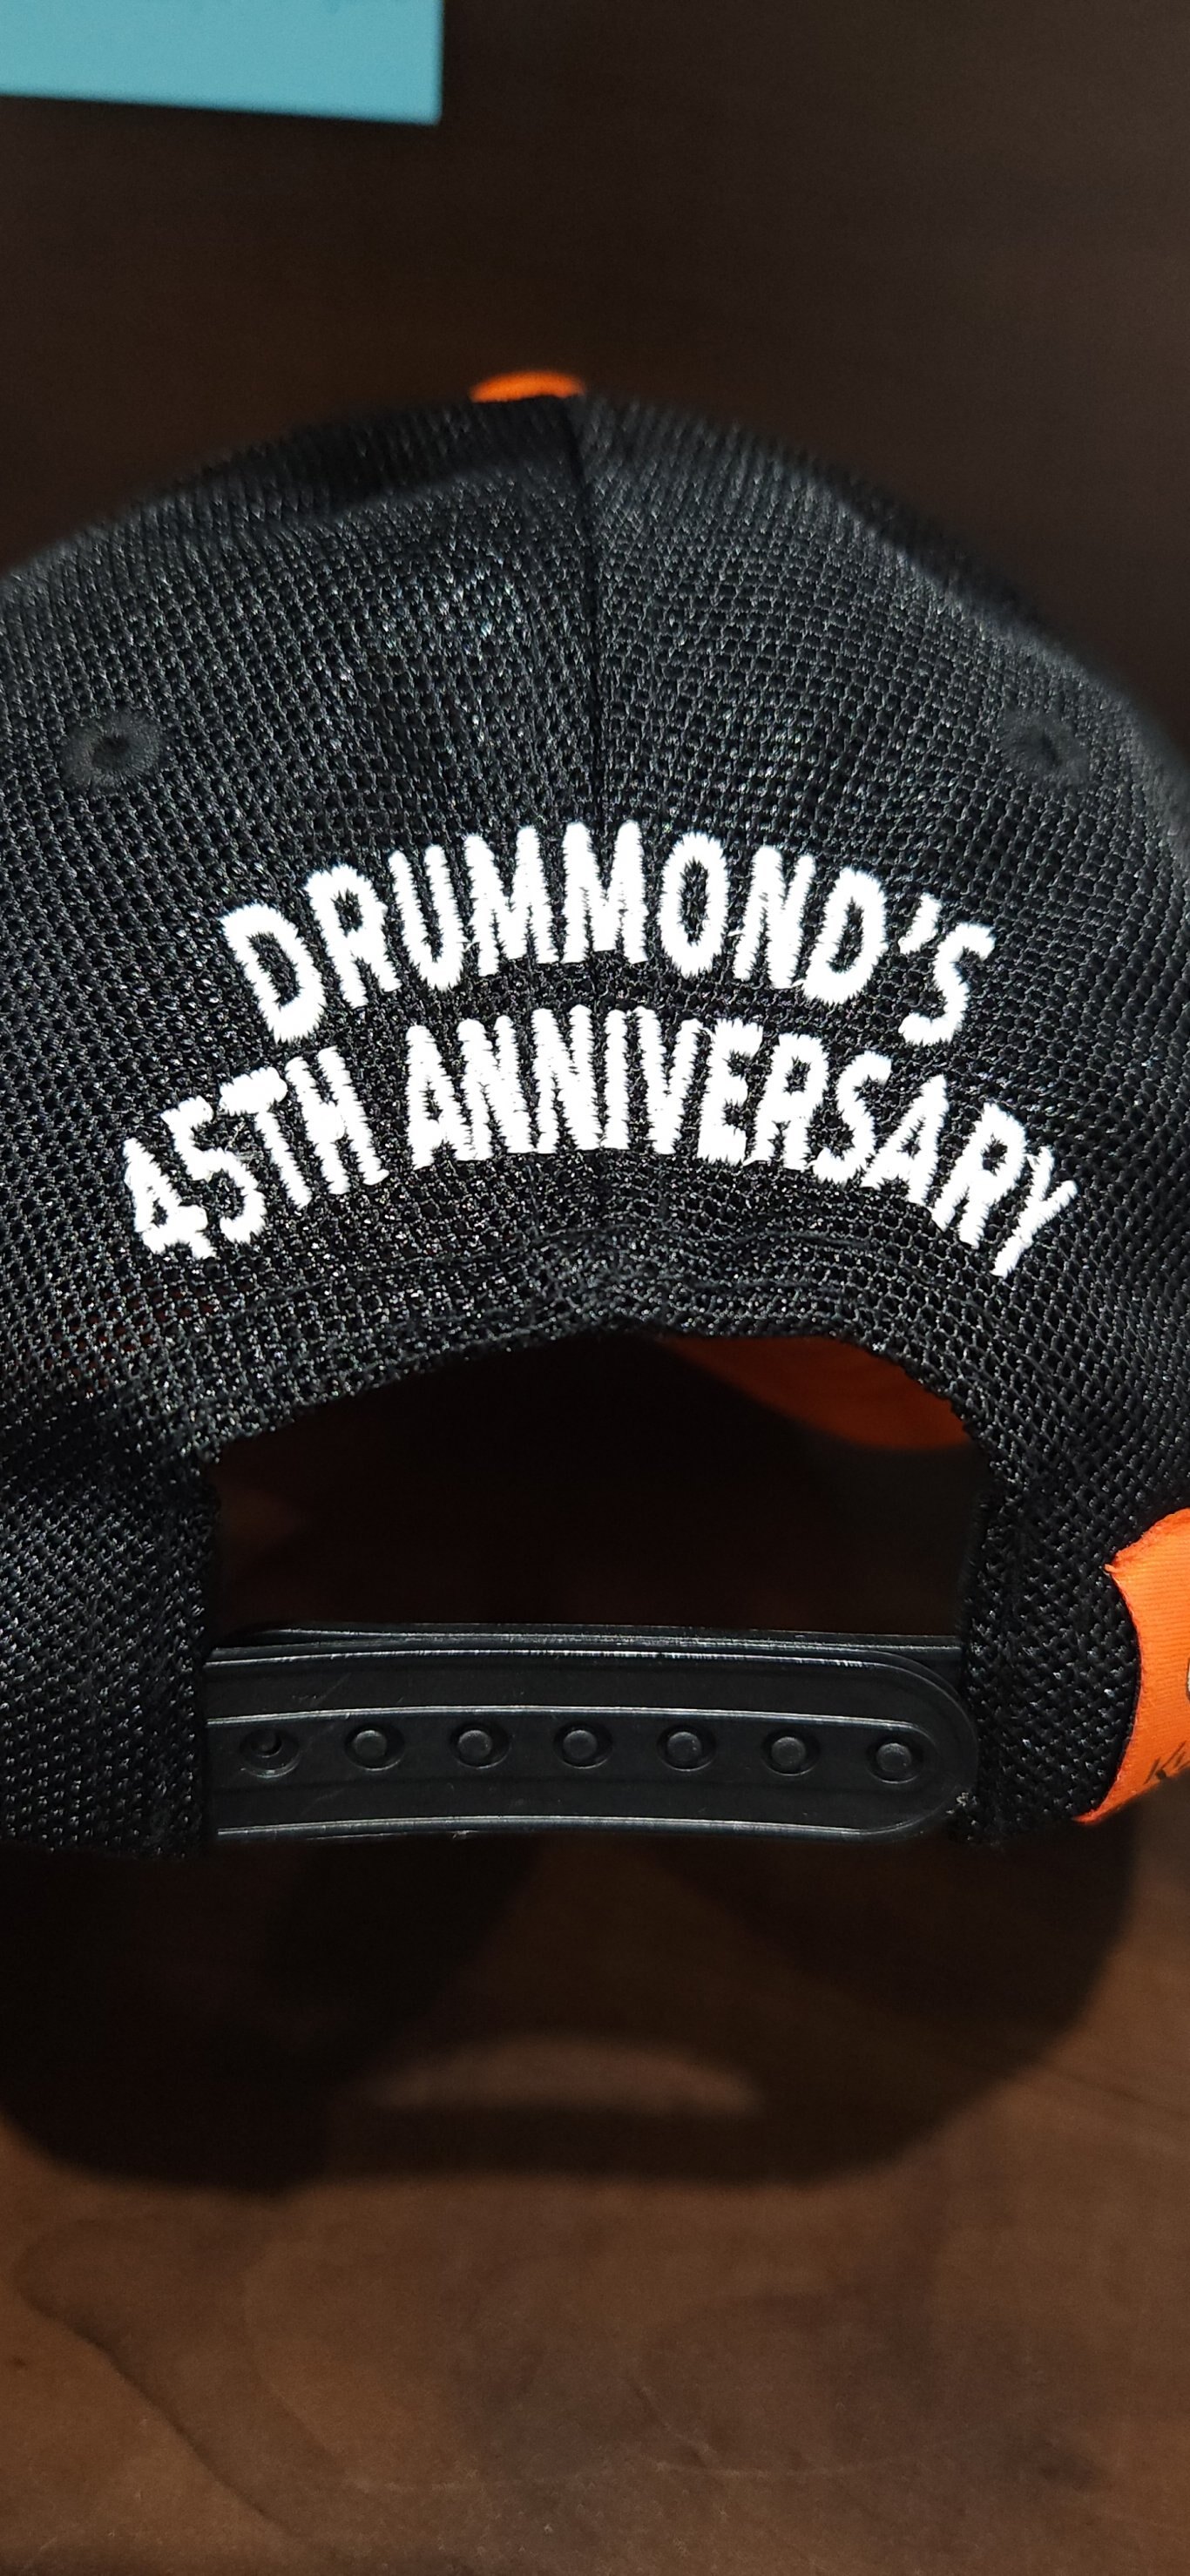 Kubota Limited Edition Drummond's 45th Anniversary Black, Yellow and Orange Hat